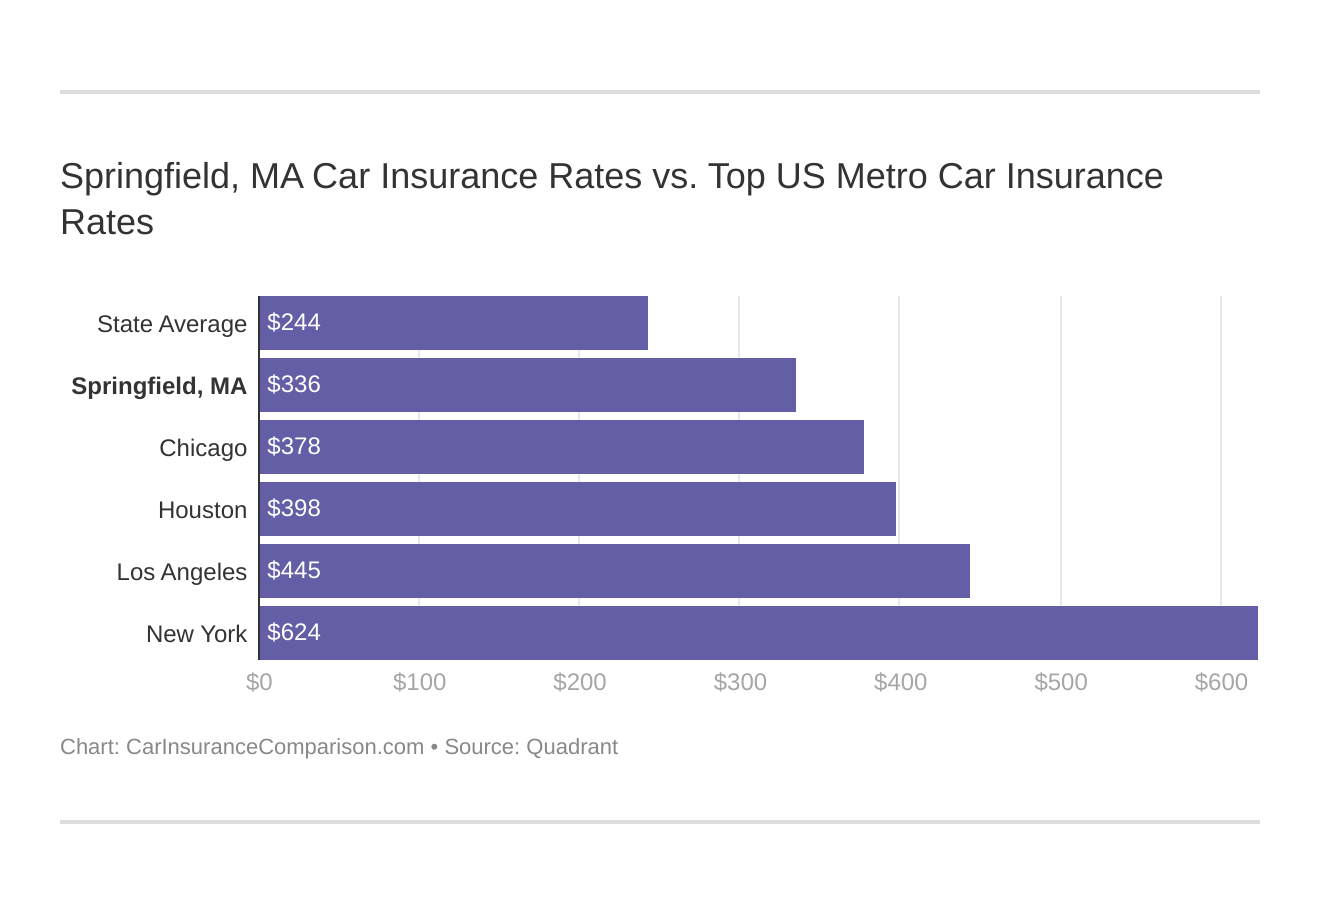 Springfield, MA Car Insurance Rates vs. Top US Metro Car Insurance Rates